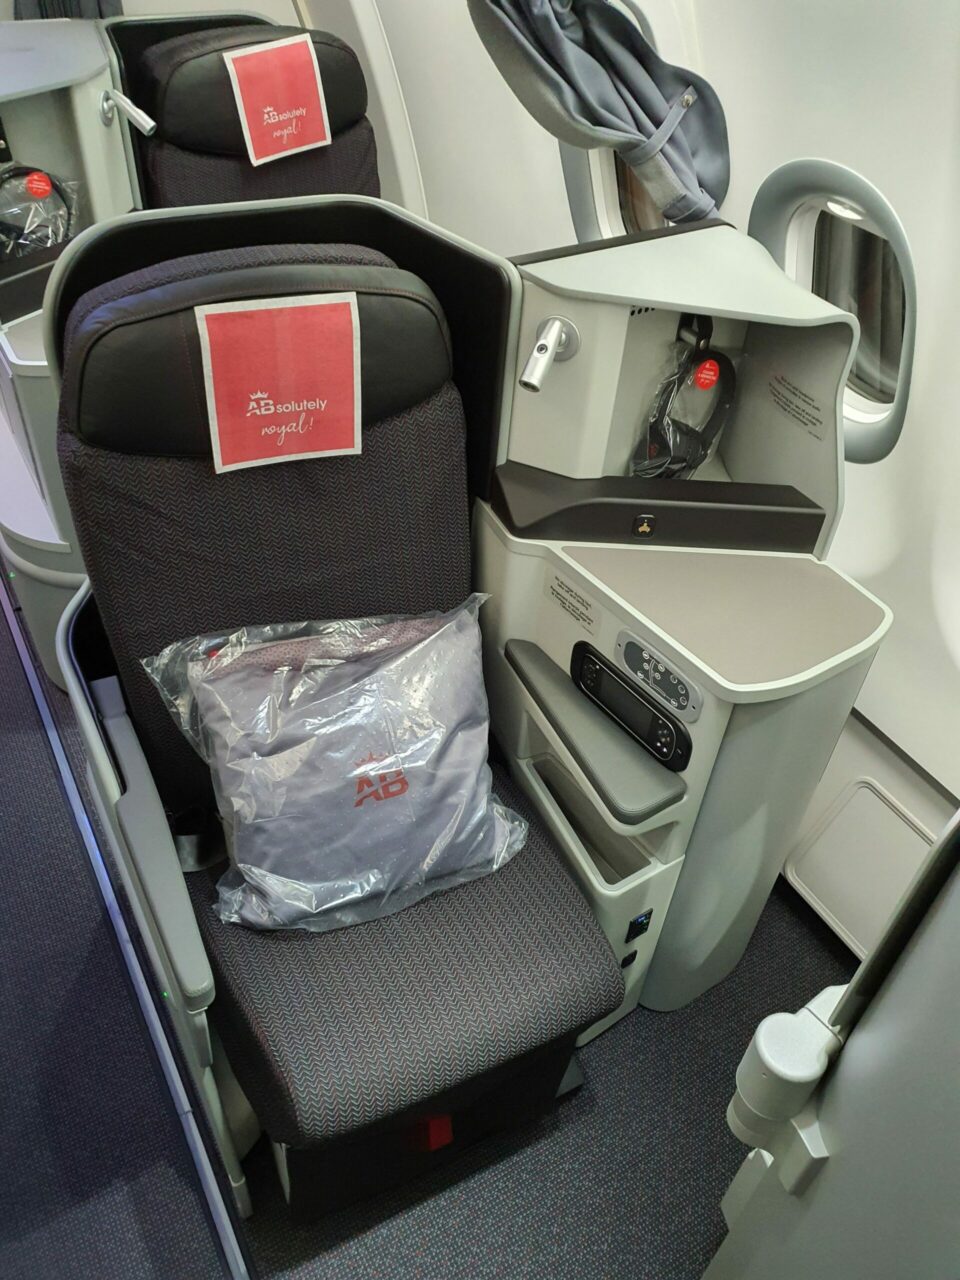 Air Belgium A330-900neo Business class seat 